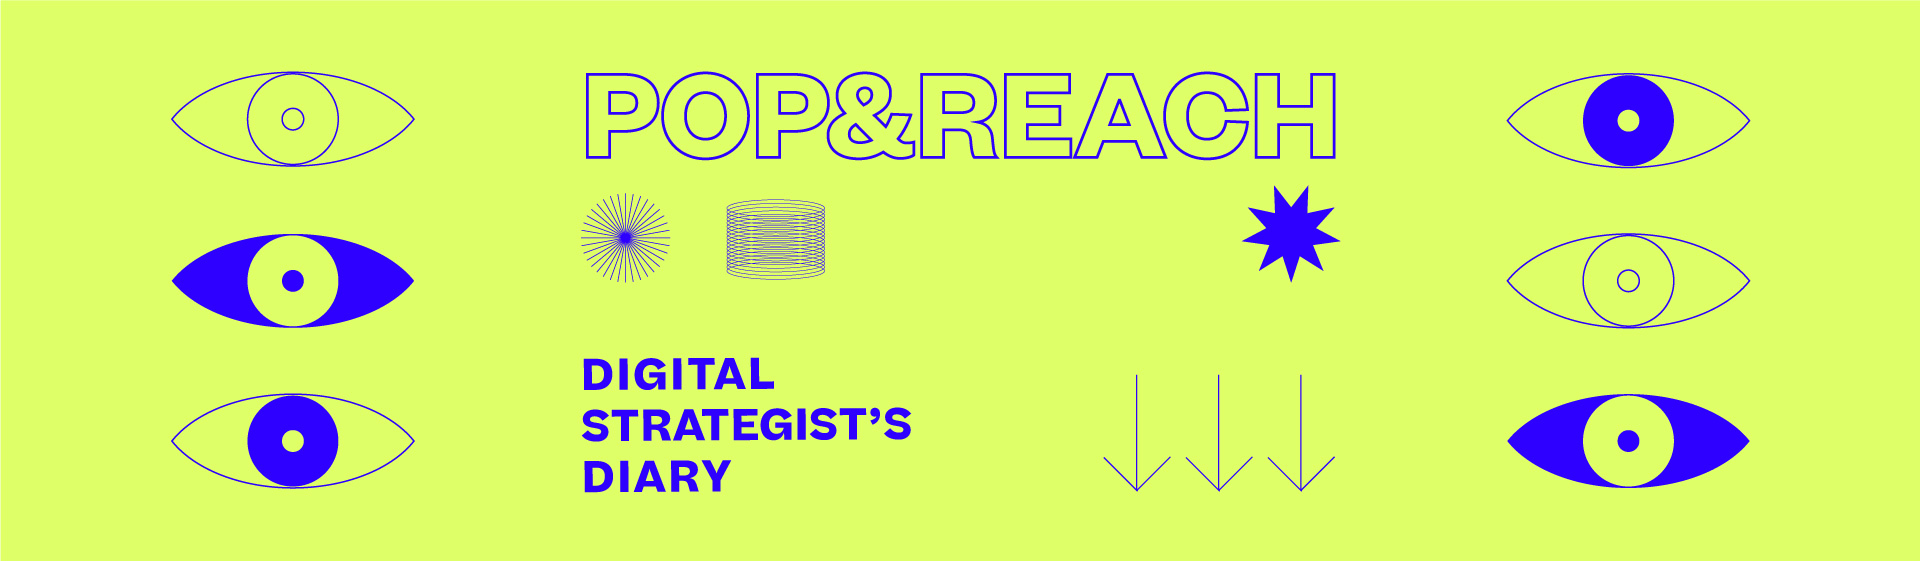 POP&REACH, DIGITAL STRATEGIST’S DIARY